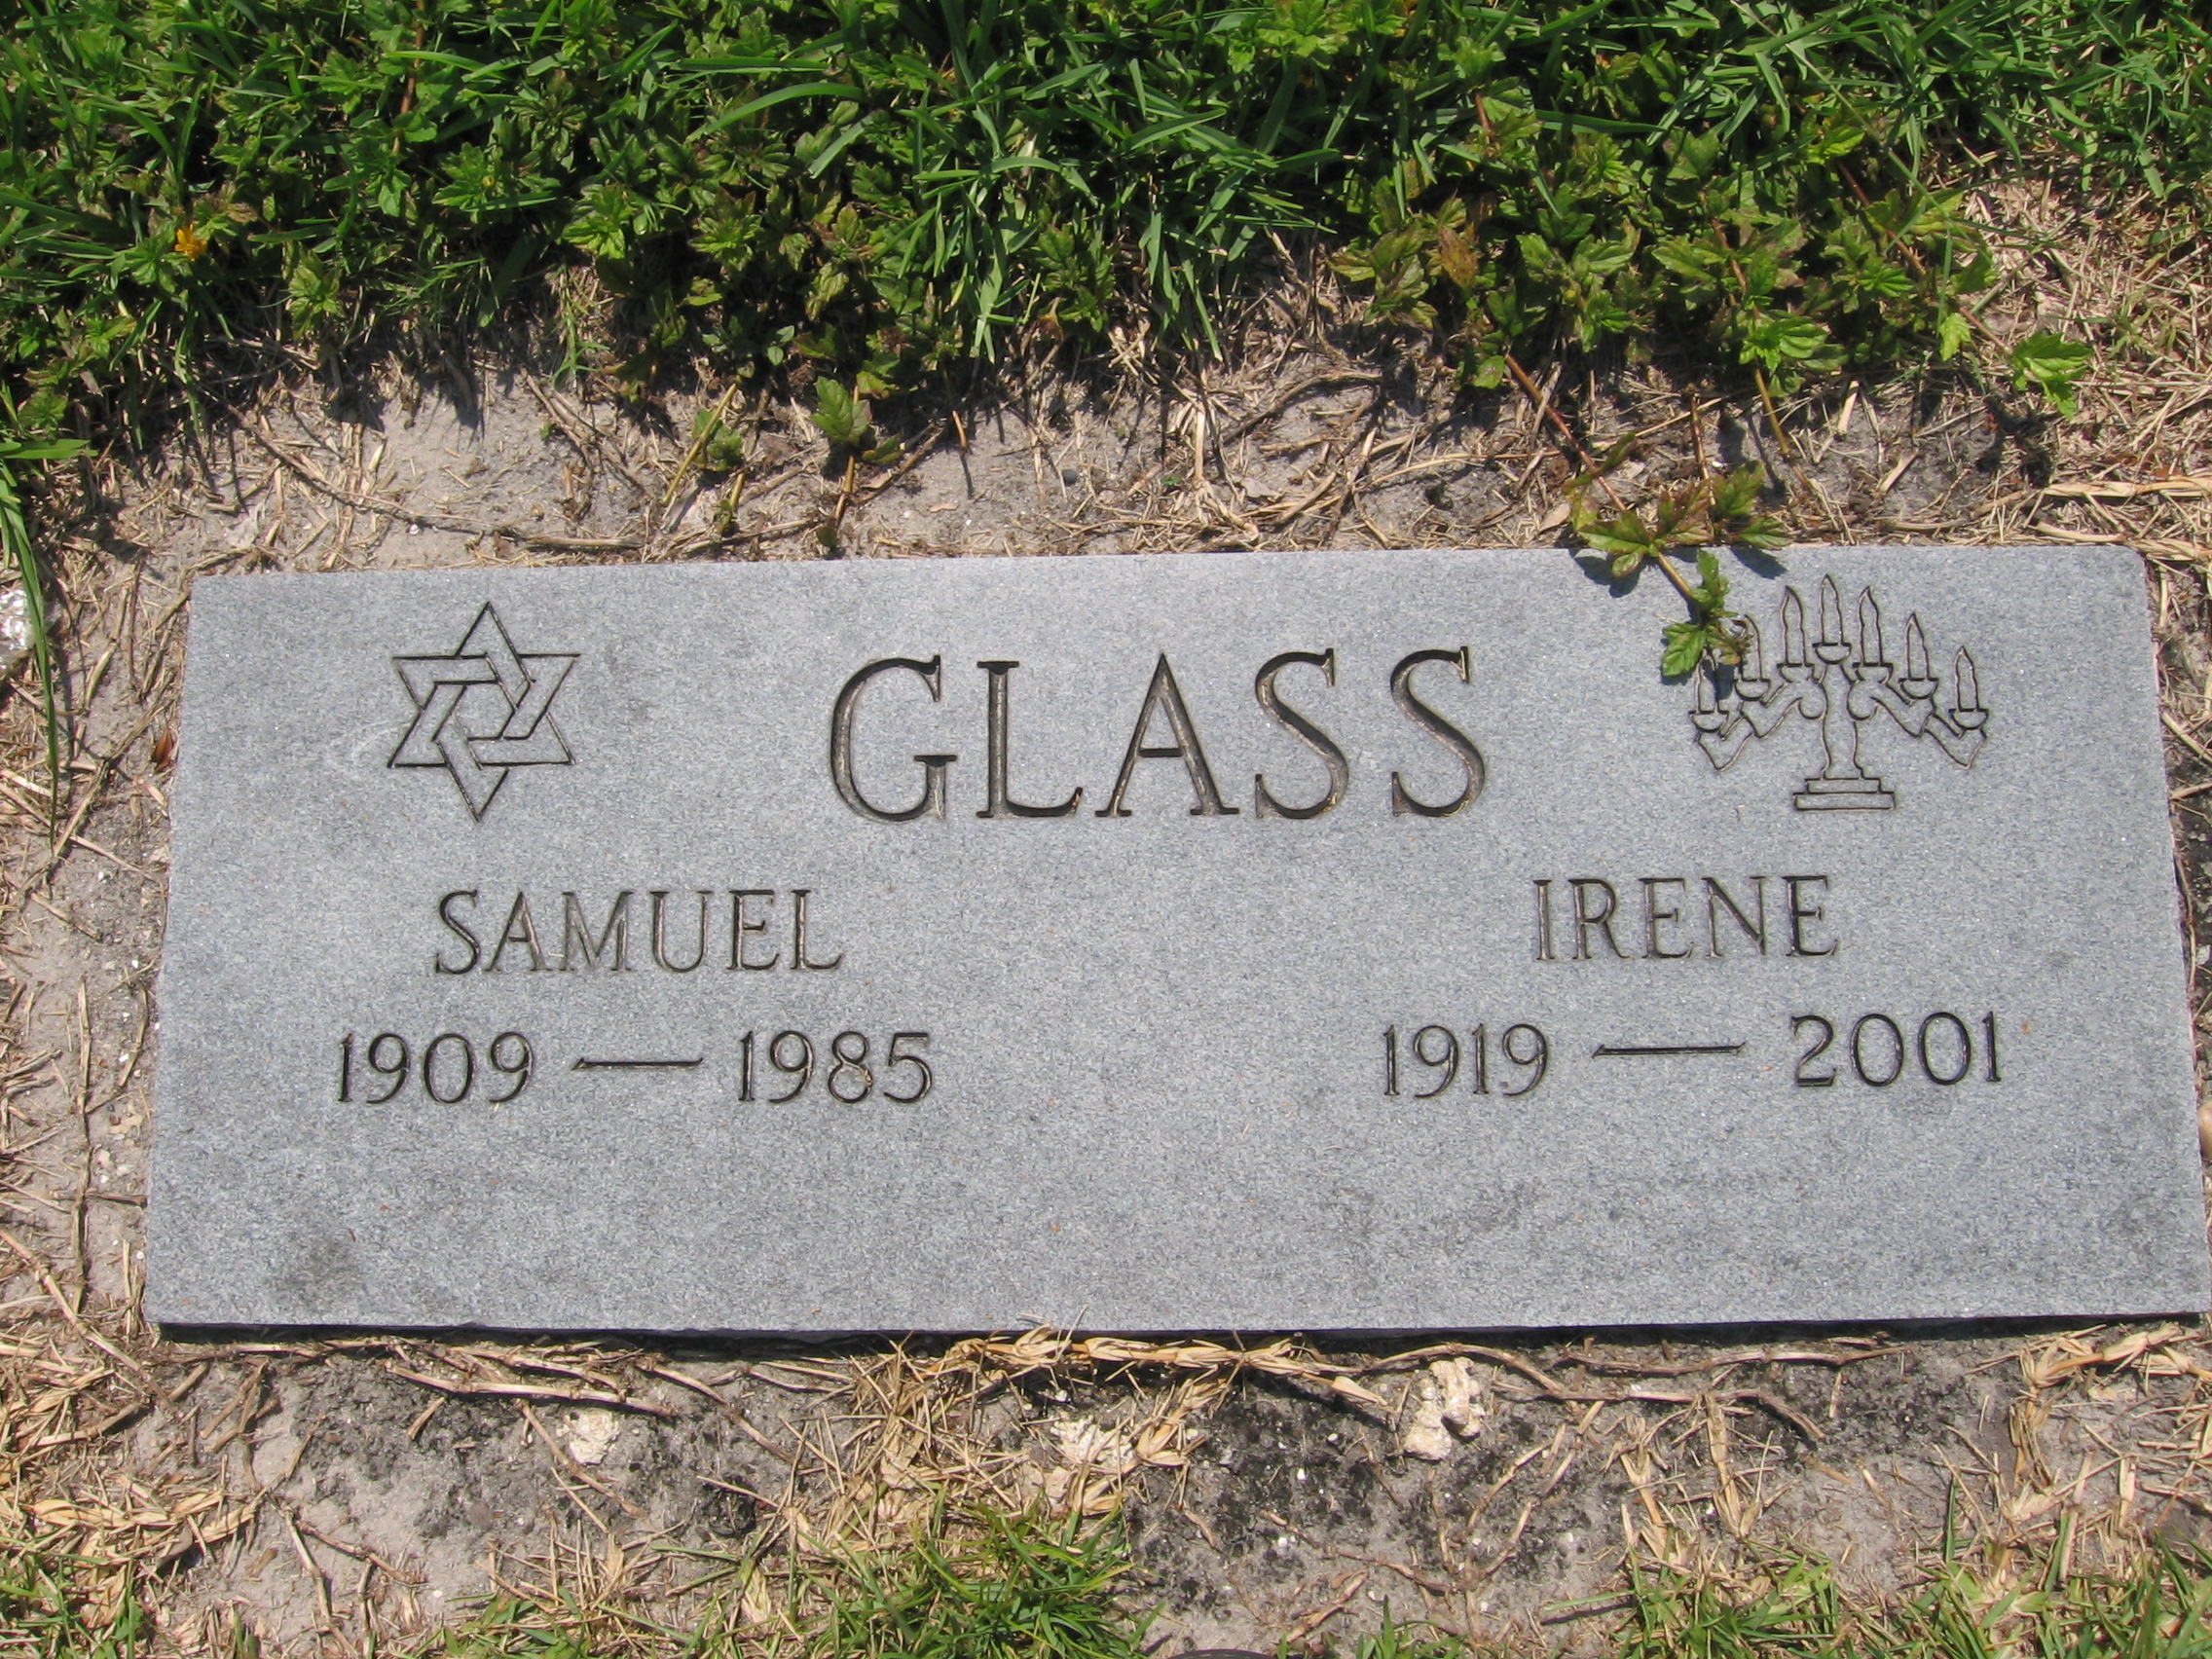 Samuel Glass